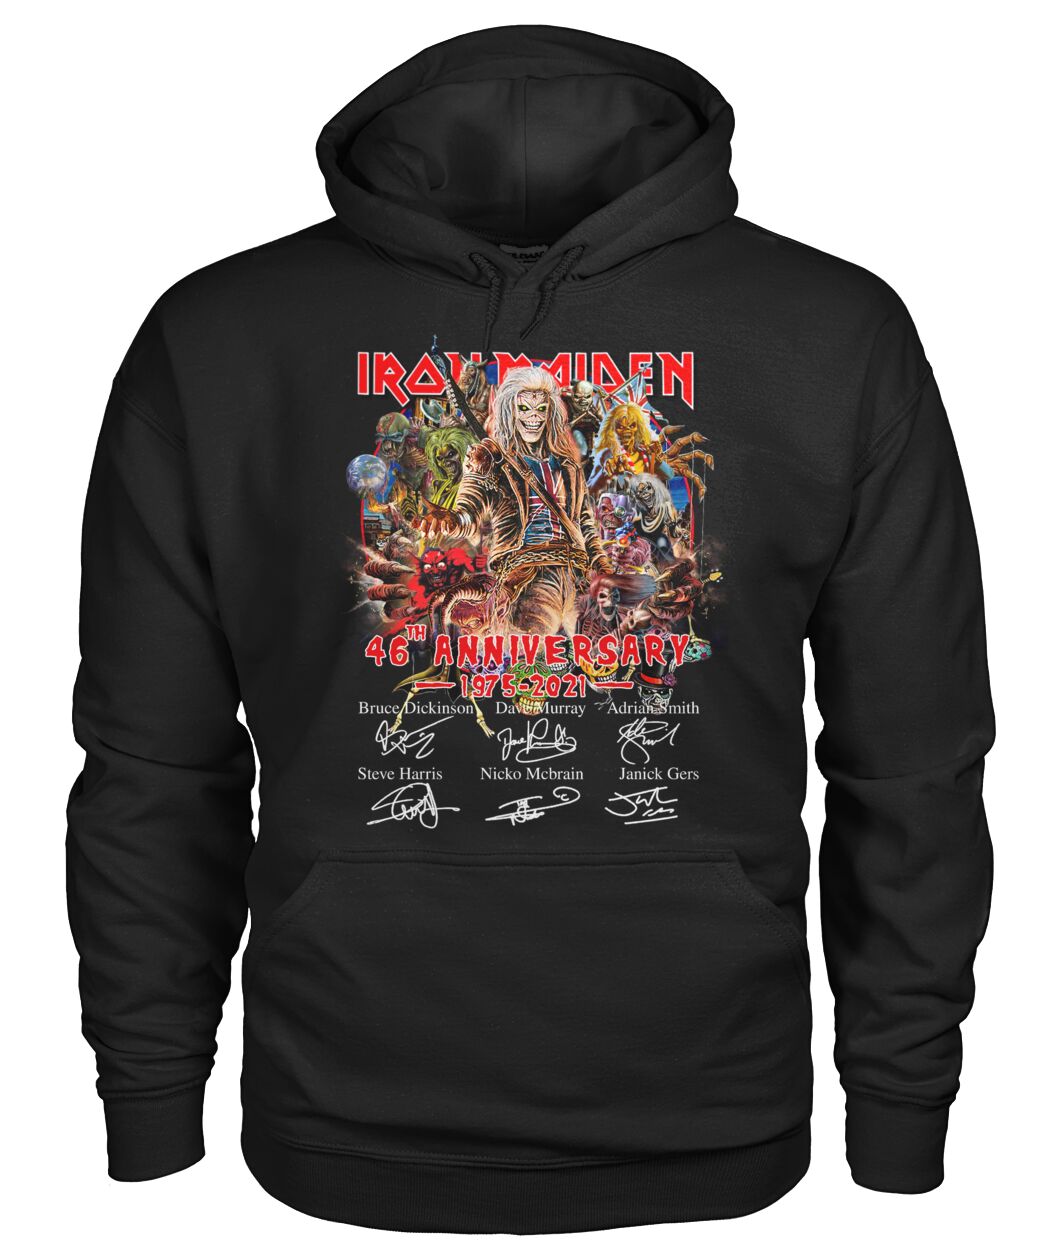 Iron Maiden 46th anniversary 3d hoodie and shirt 1